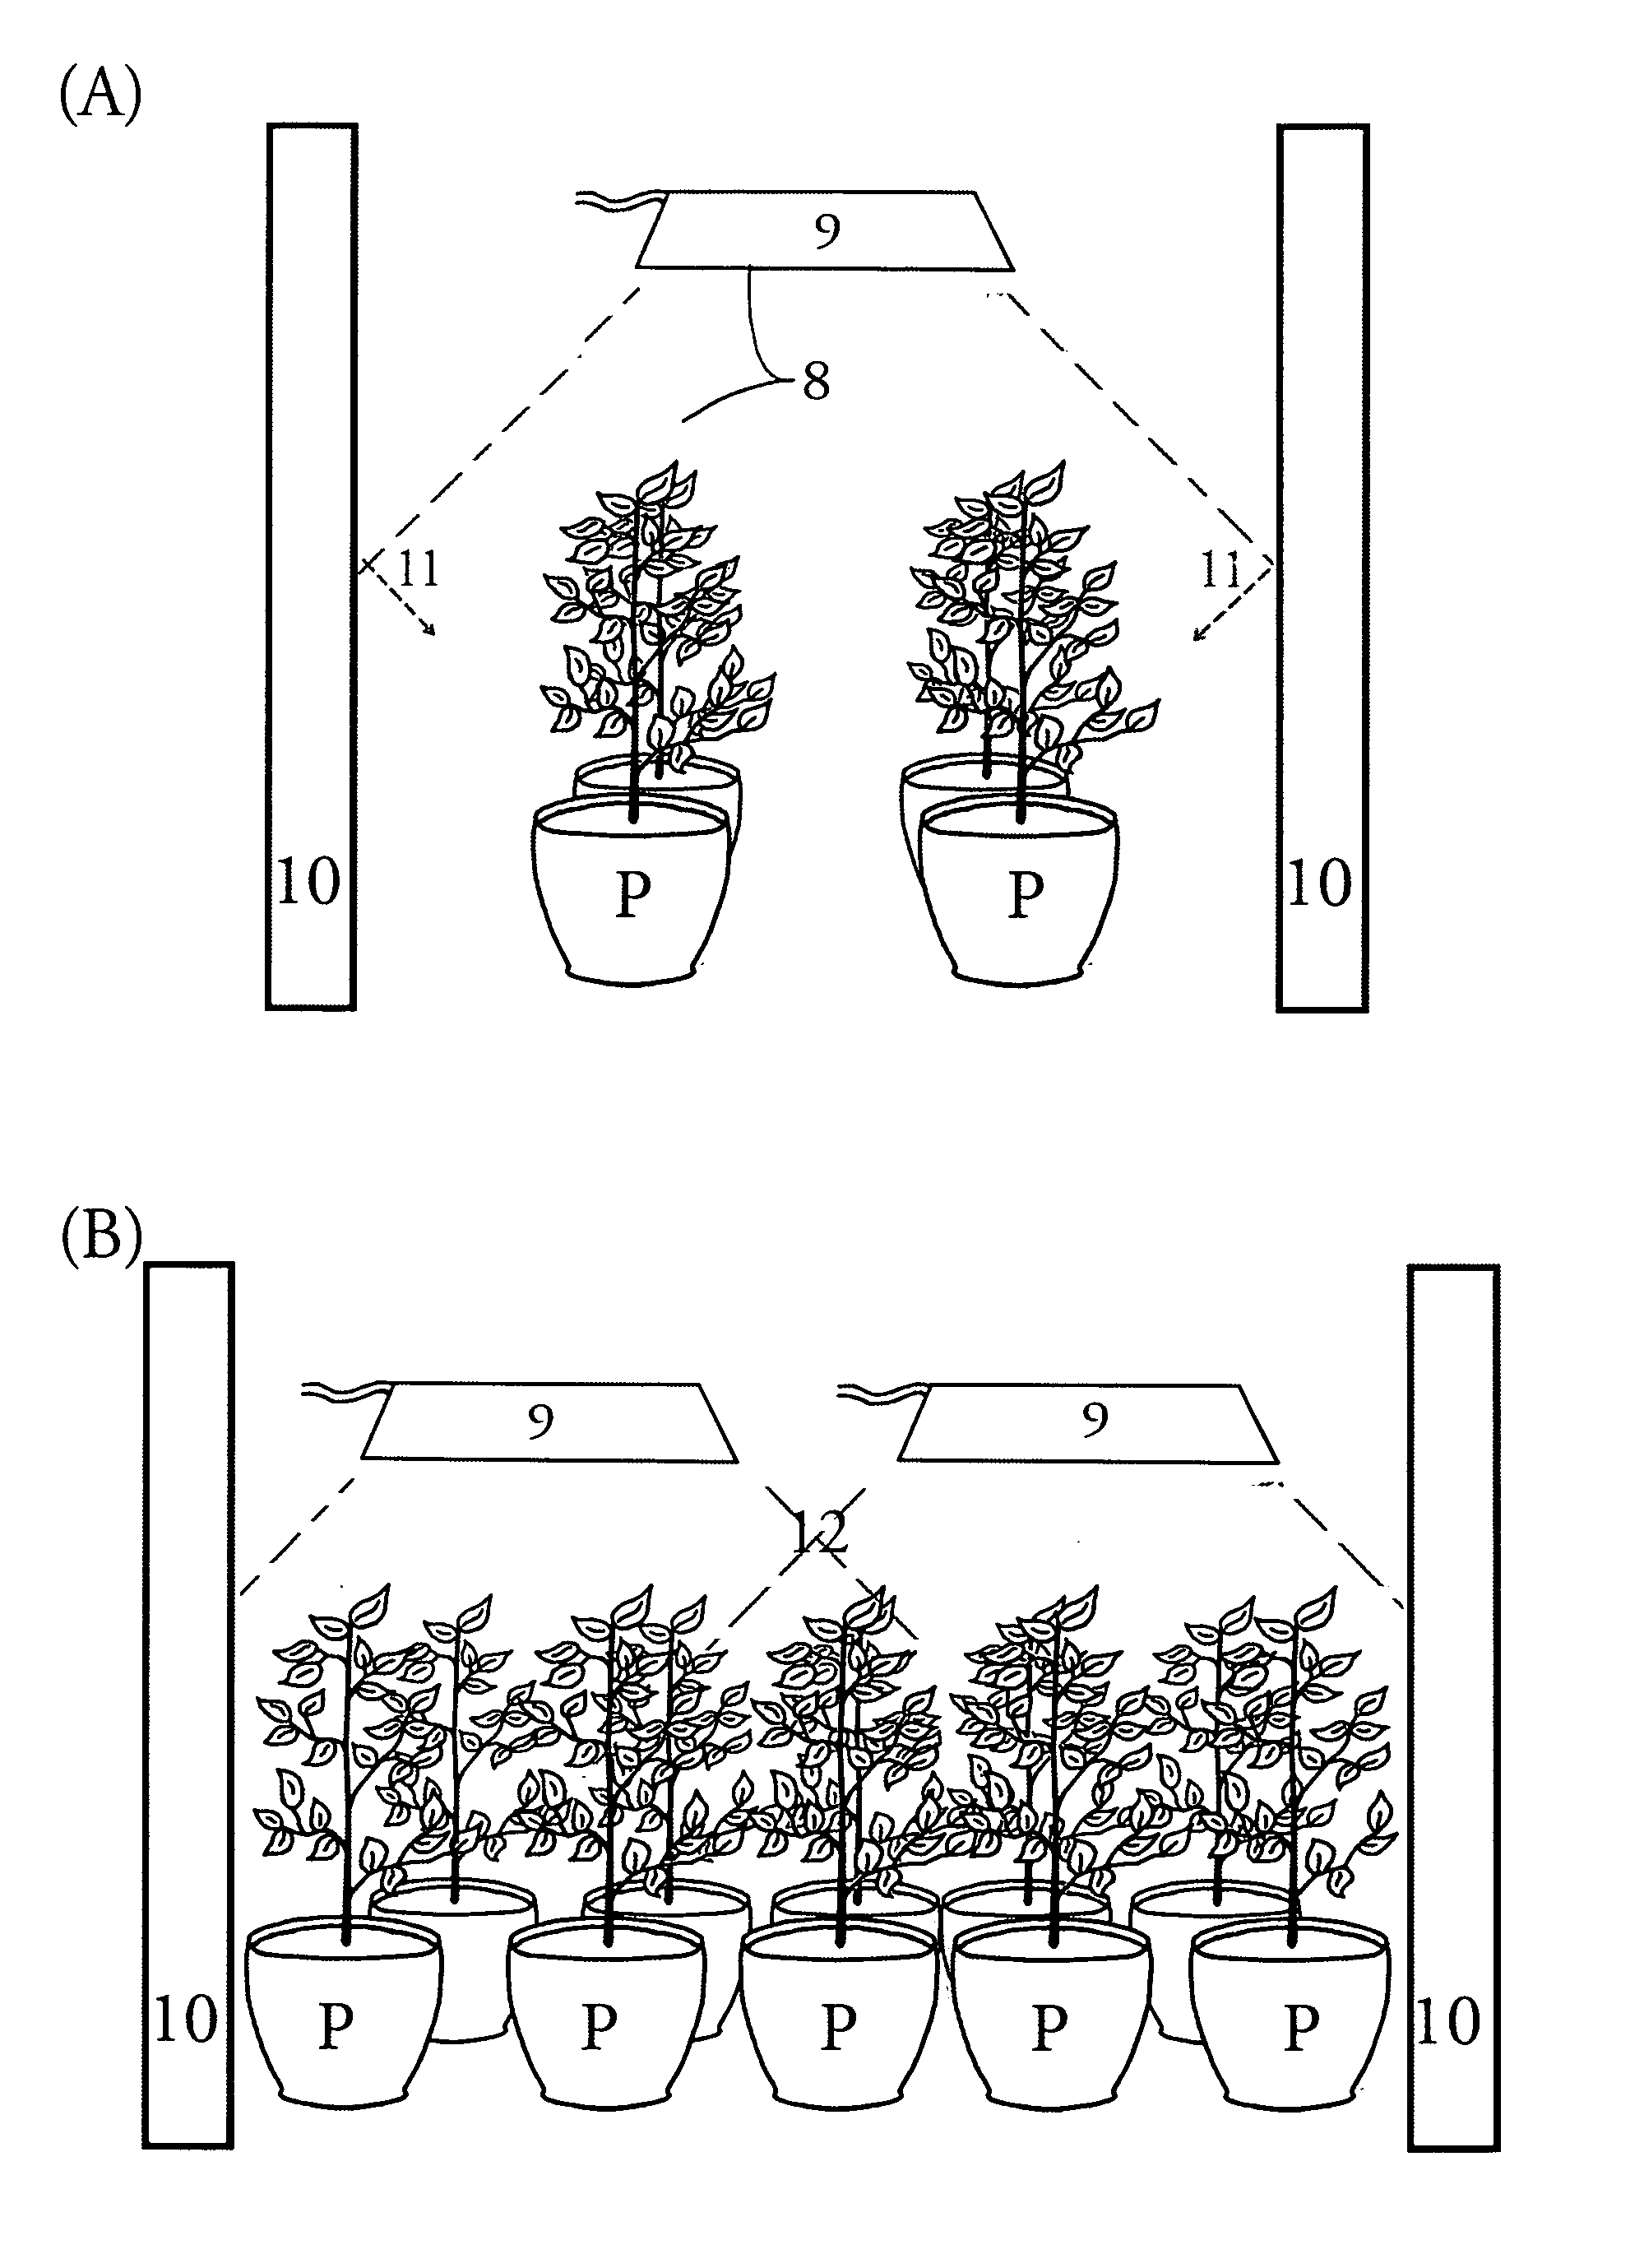 Spectural specific horticulture apparatus